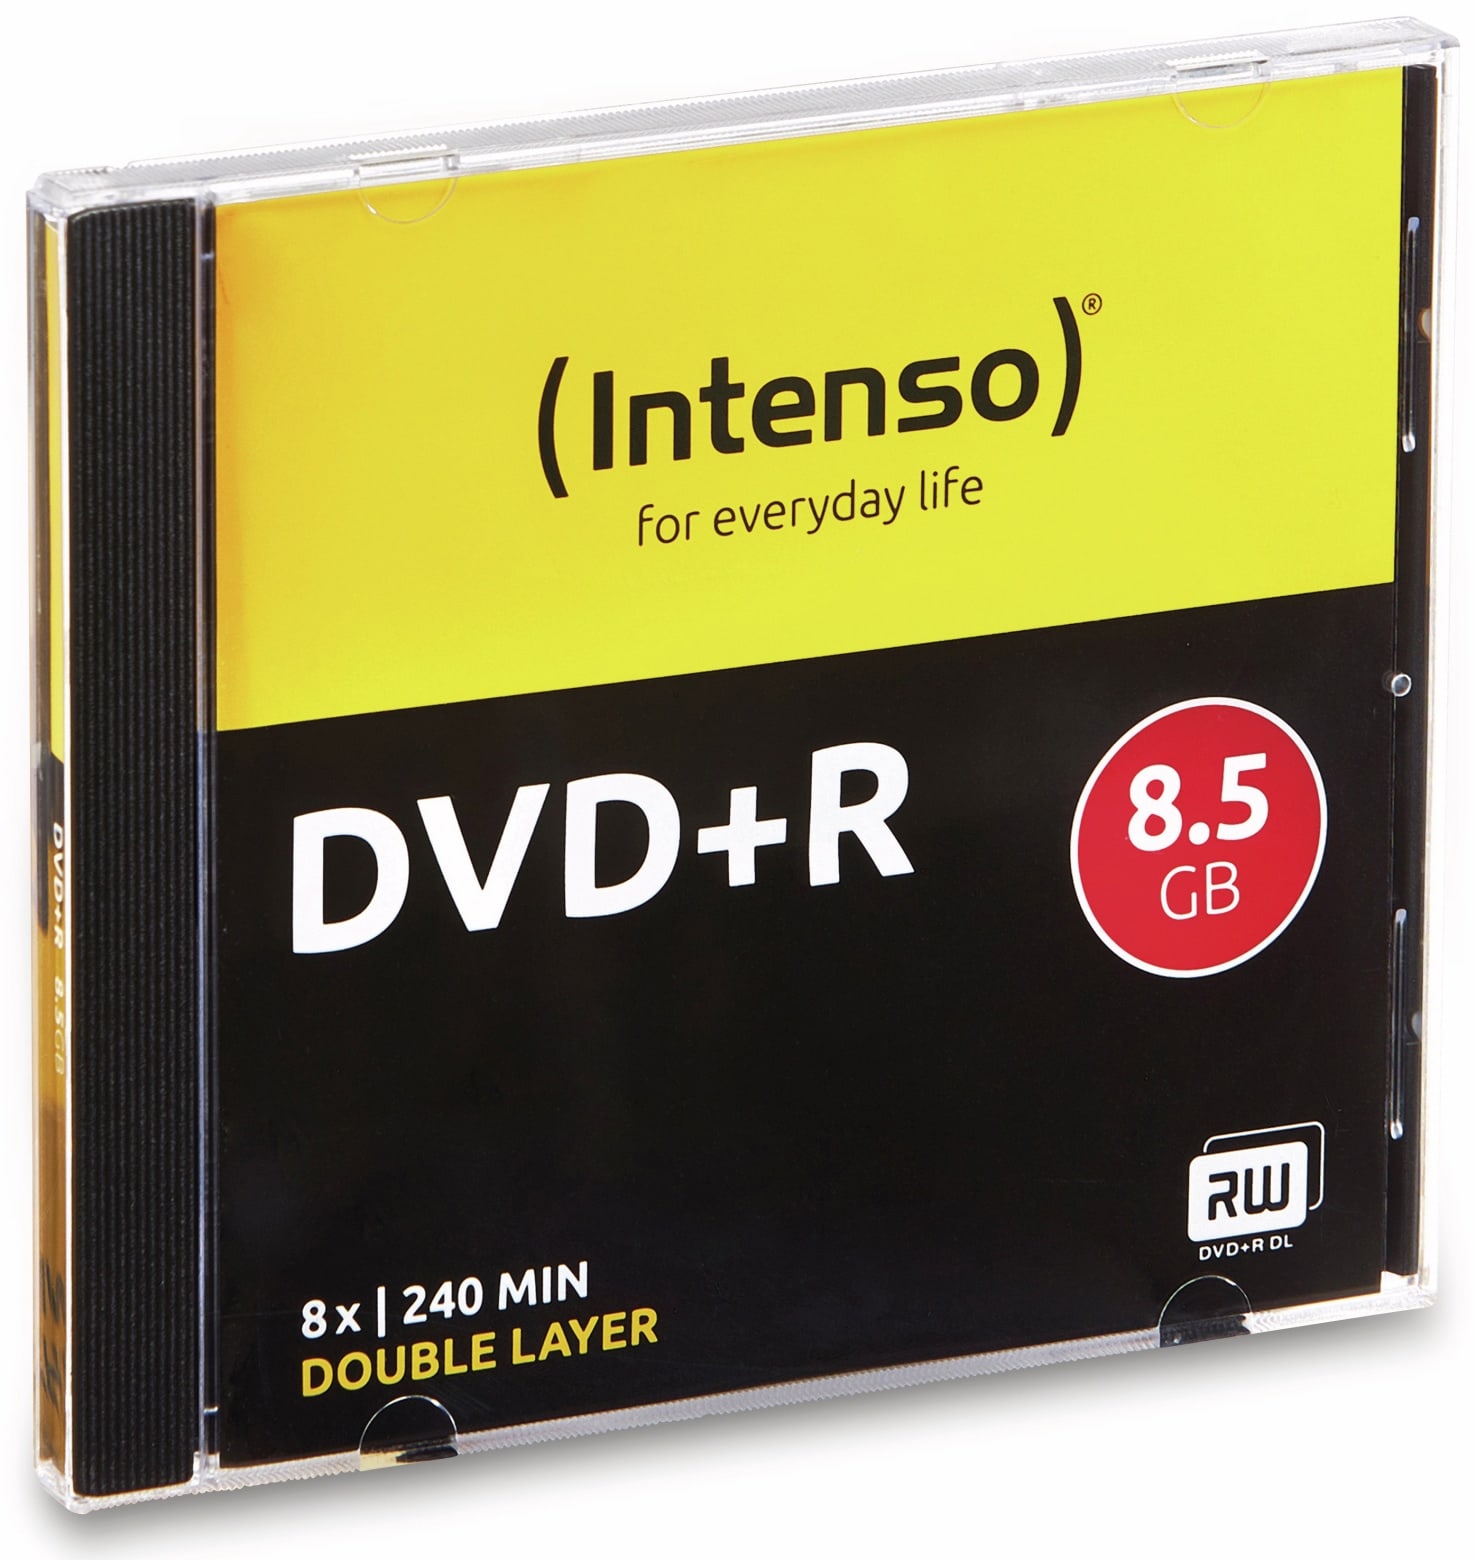 INTENSO DVD+R Jewel Case (DoubleLayer)